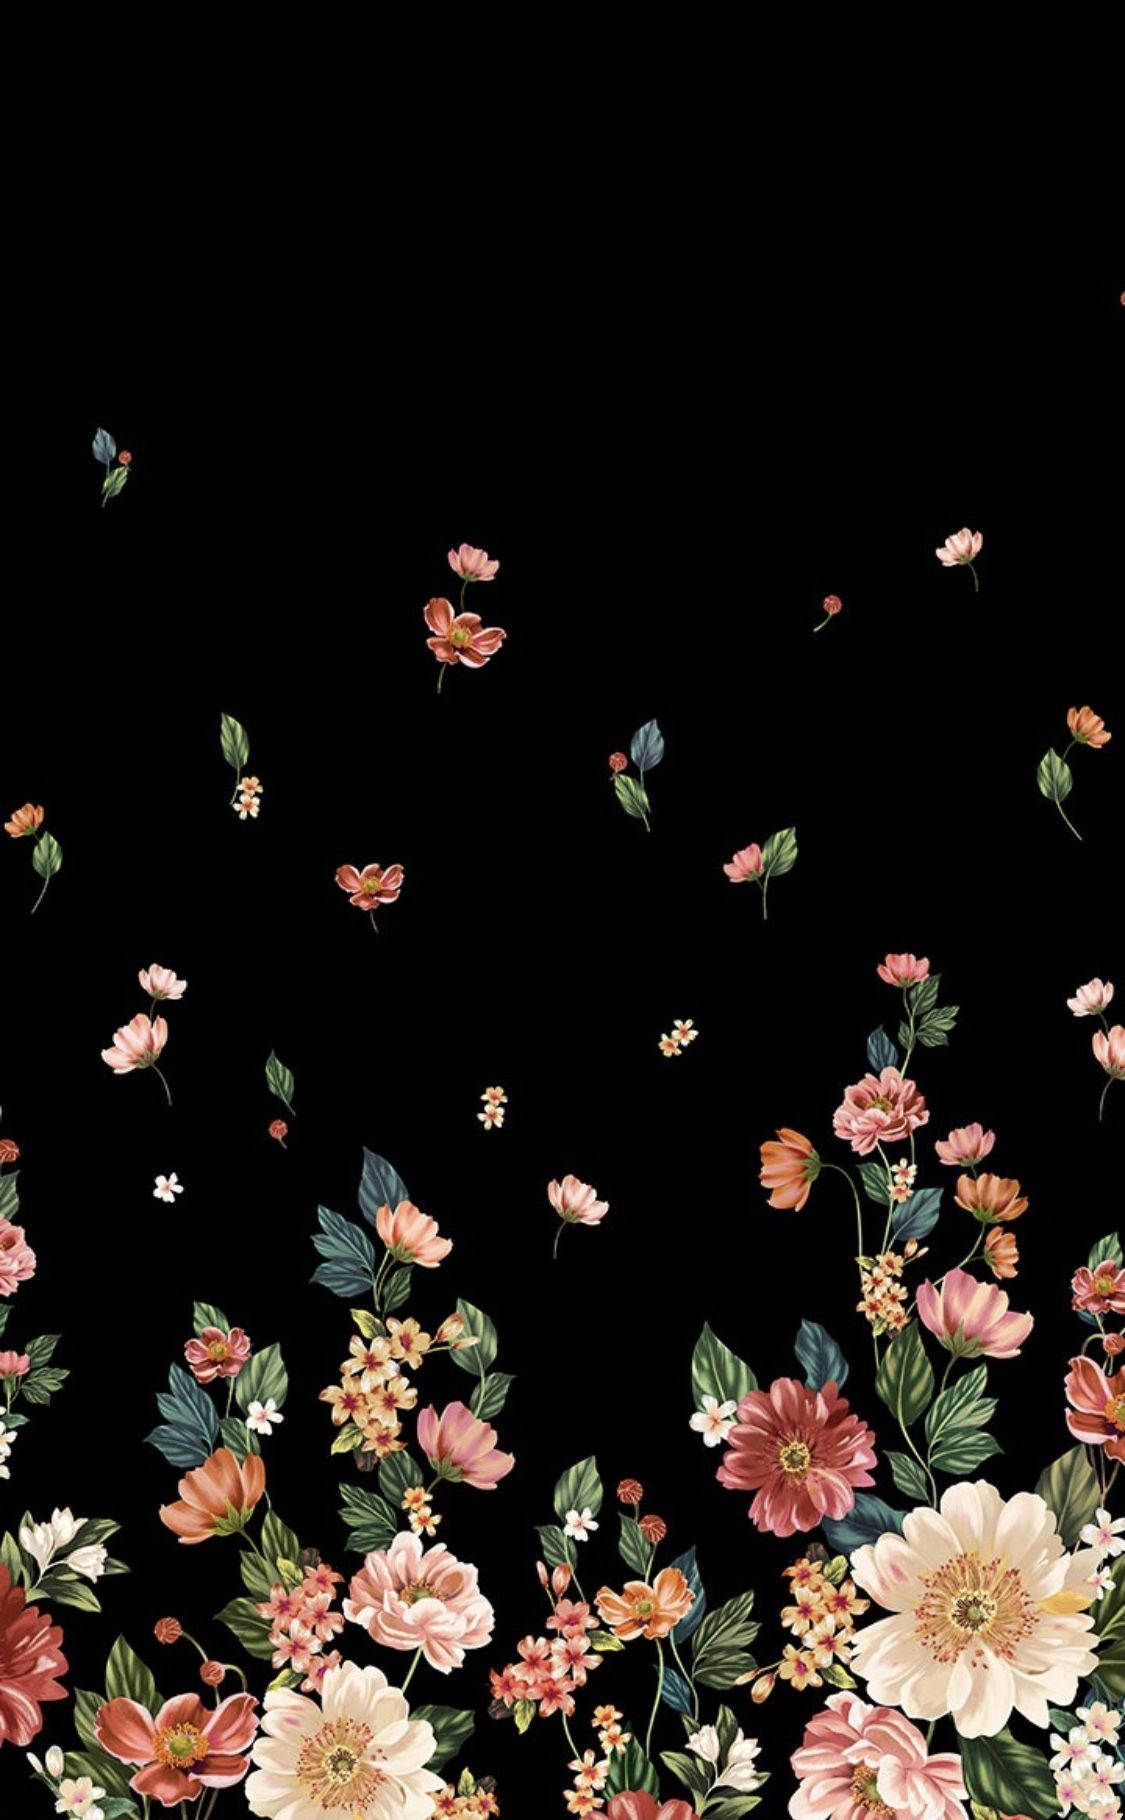 Falling Floral On Dark Background Wallpaper